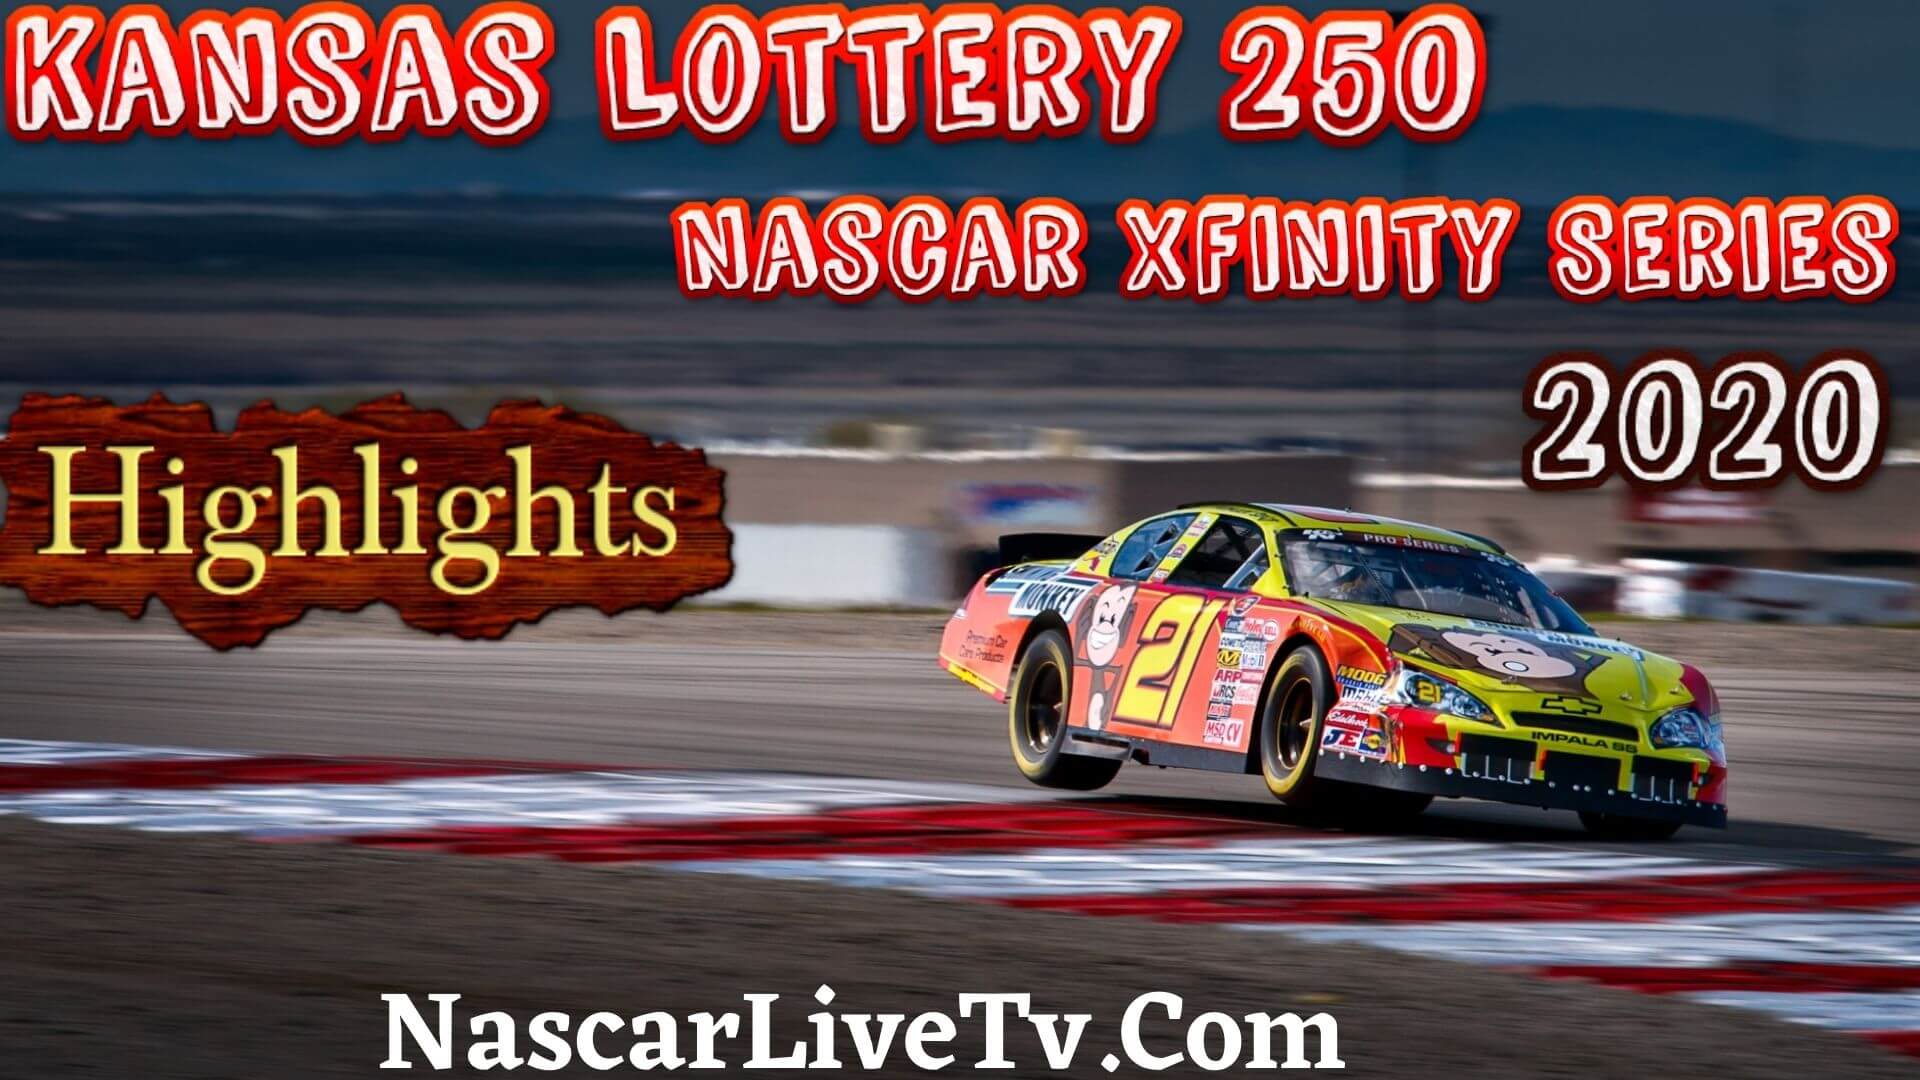 Kansas Lottery 250 Nascar Xfinity Series 2020 Highlights